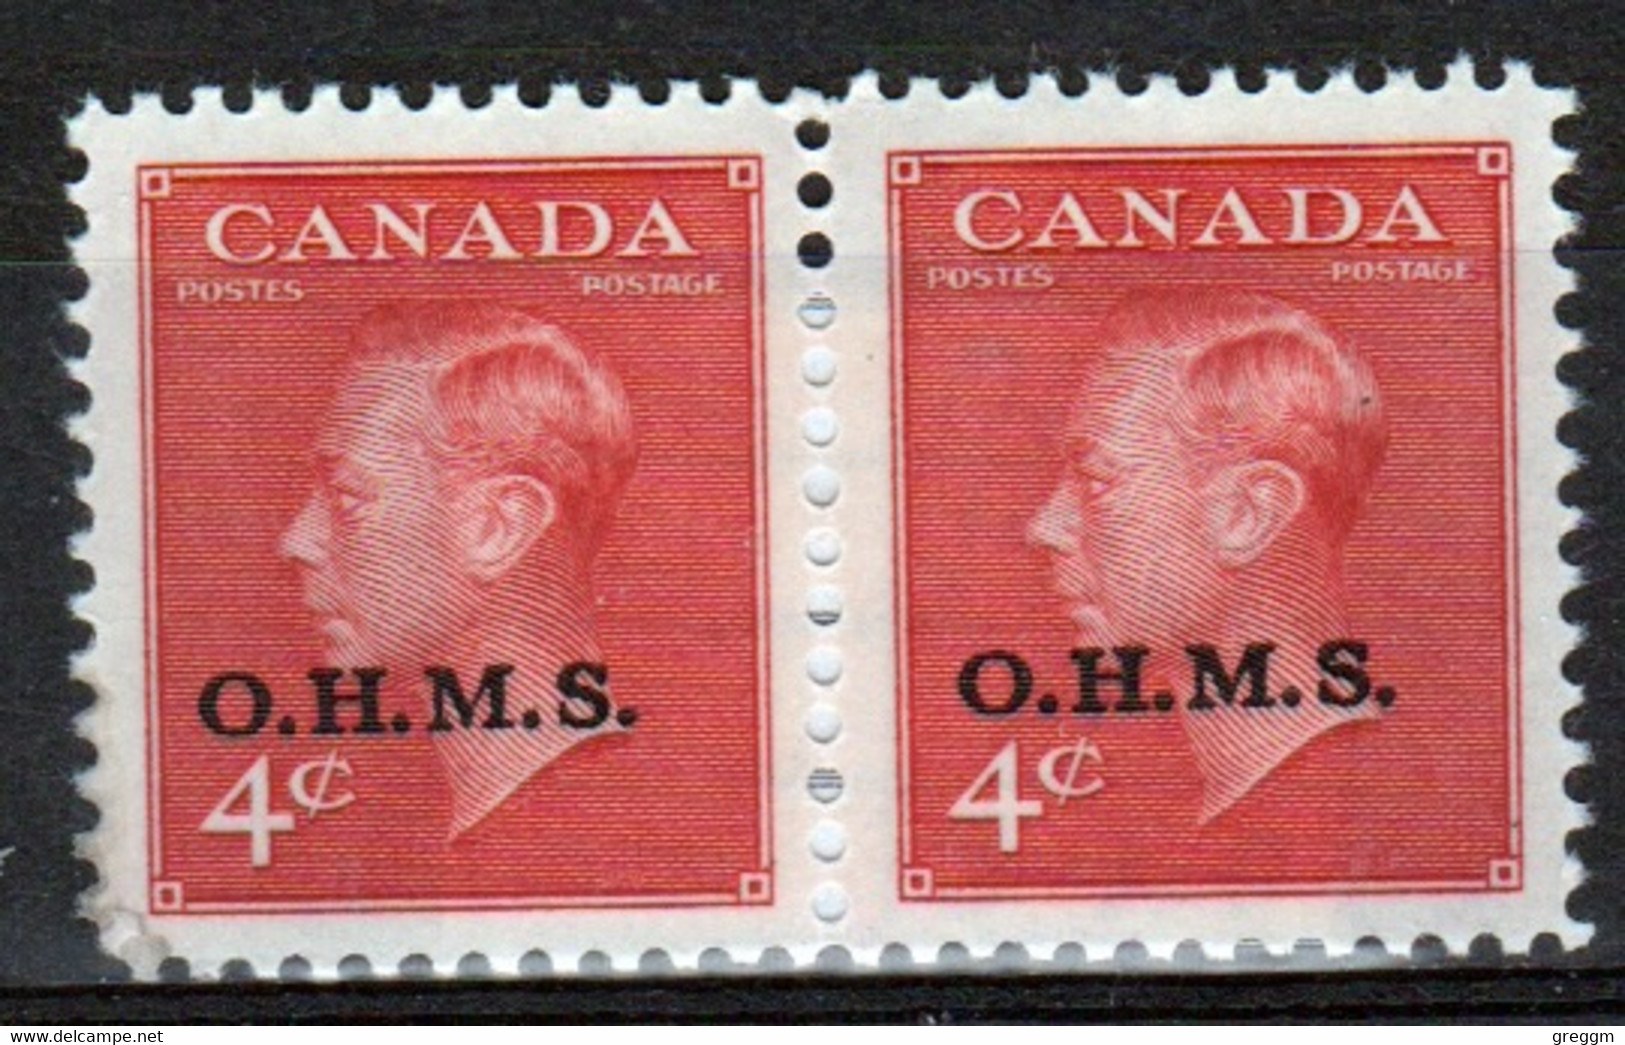 Canada 1949-50 Pair Of 4c Stamps Overprinted O.H.M.S. In Unmounted Mint - Aufdrucksausgaben